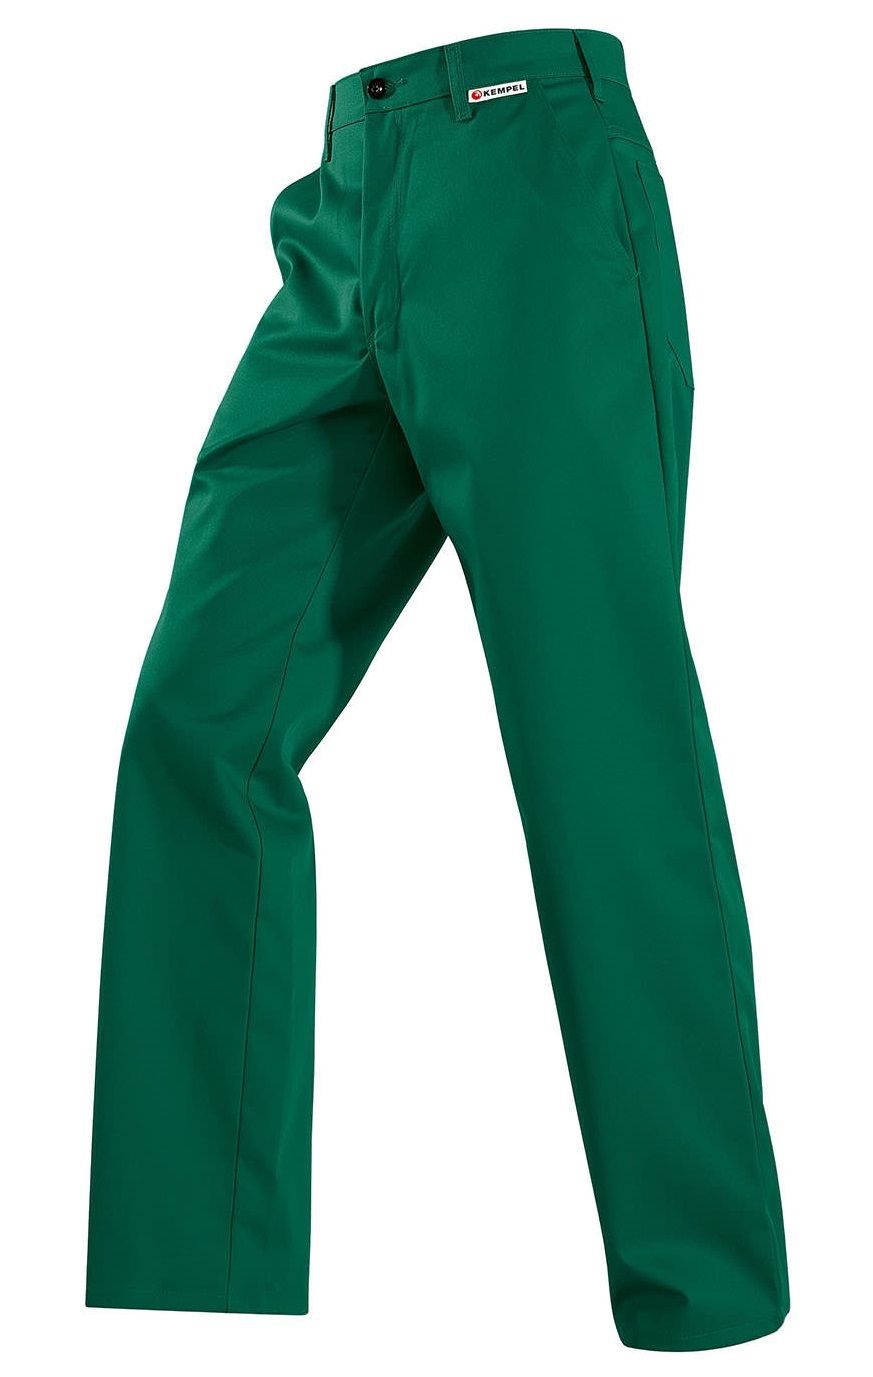 KEMPEL Bundhose Arbeitshose Berufshose Workerhose Arbeitskleidung Berufskleidung grün ca 325g